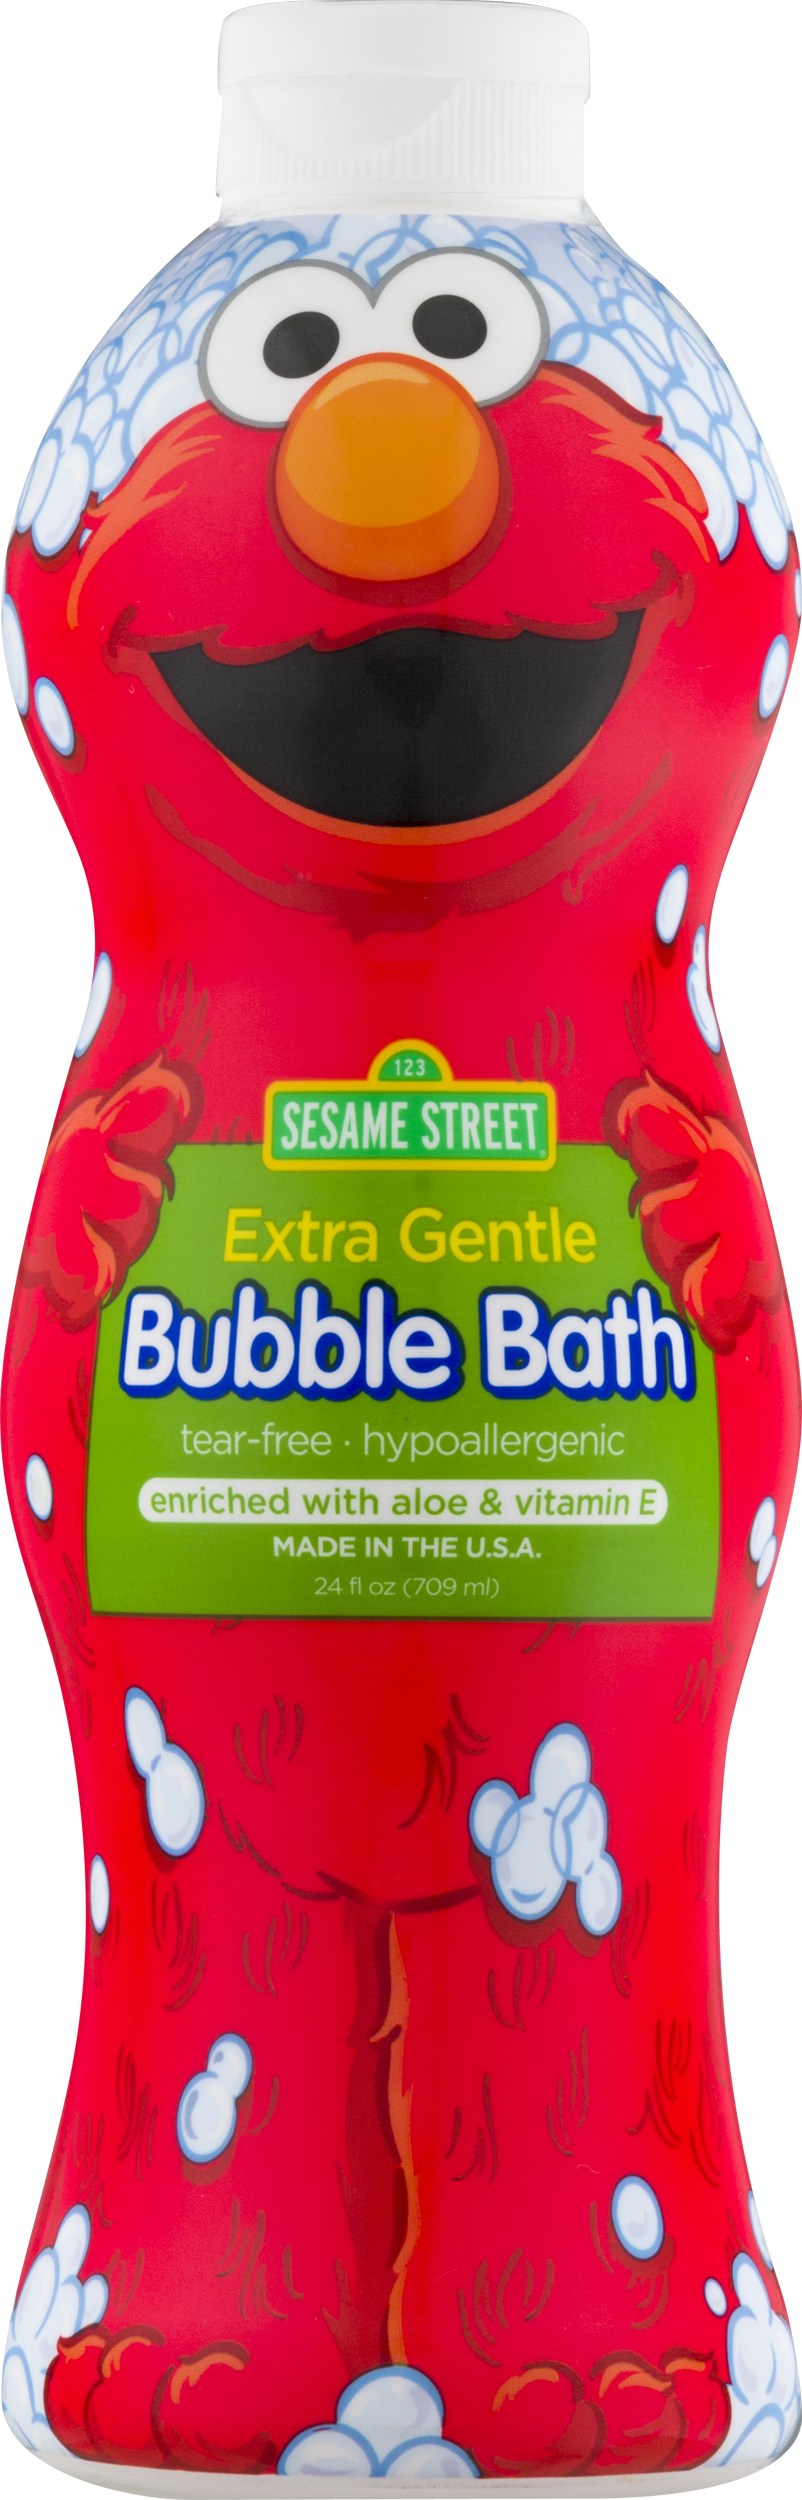 Elmo Bubble Bath Product